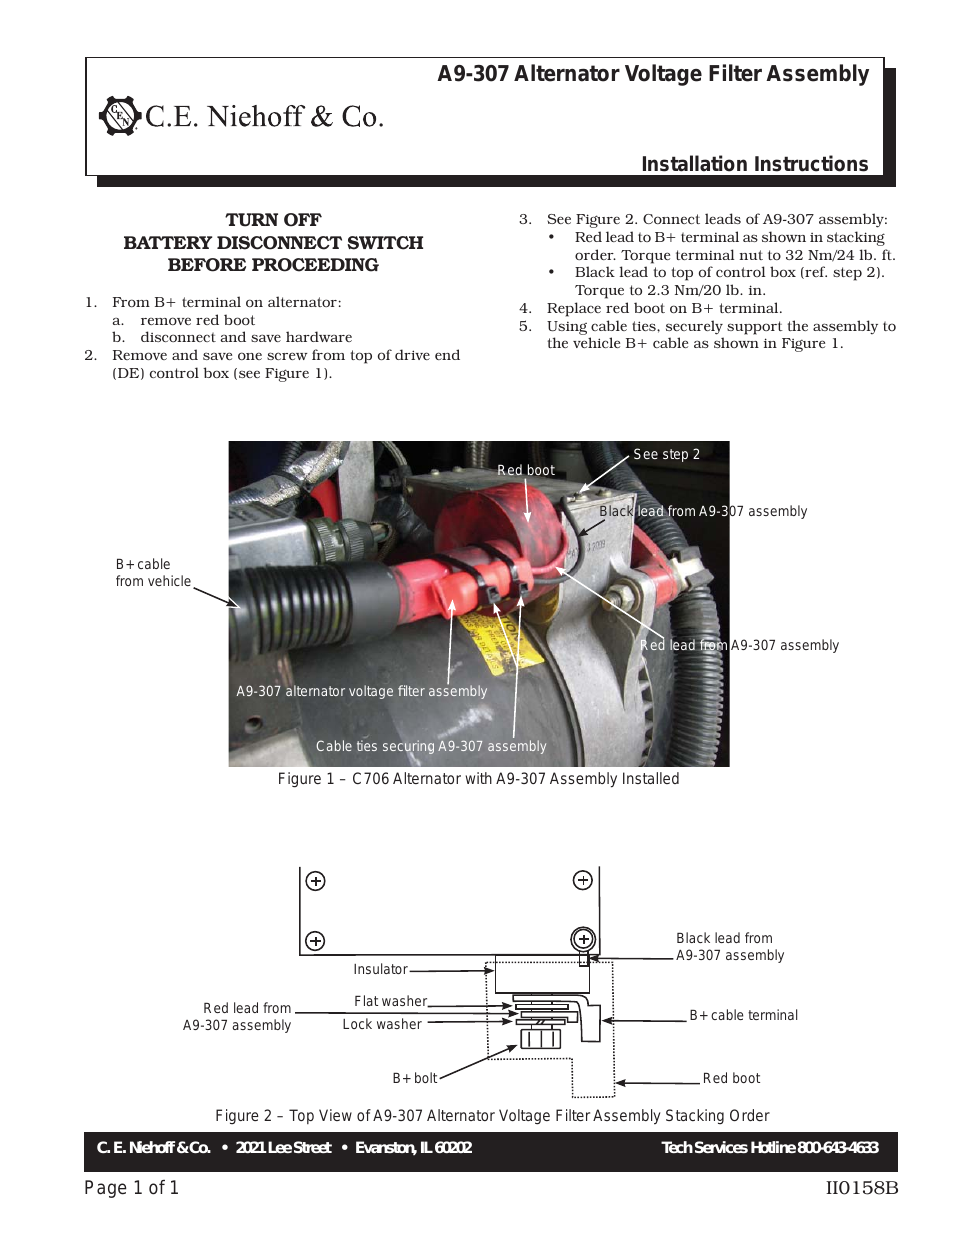 A9-307 Alternator Voltage Filter Instructions